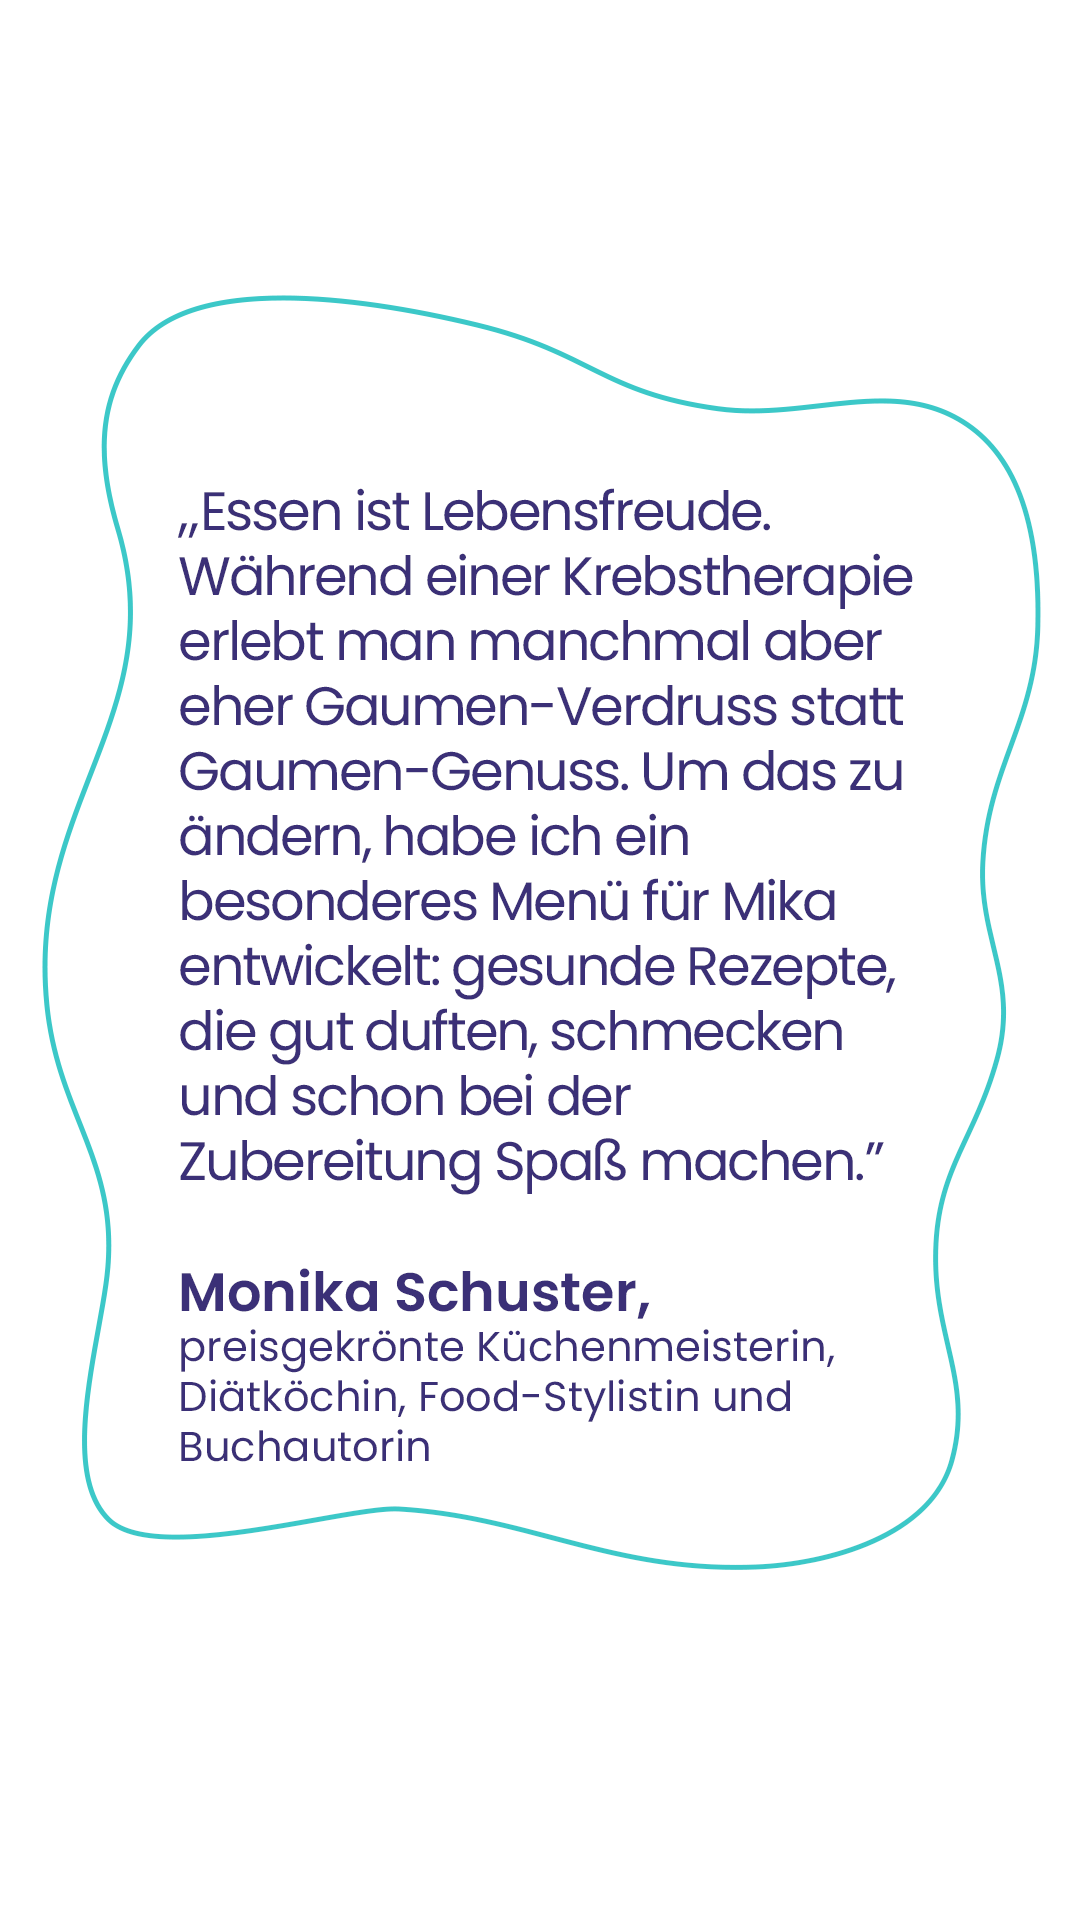 Monika Schuster